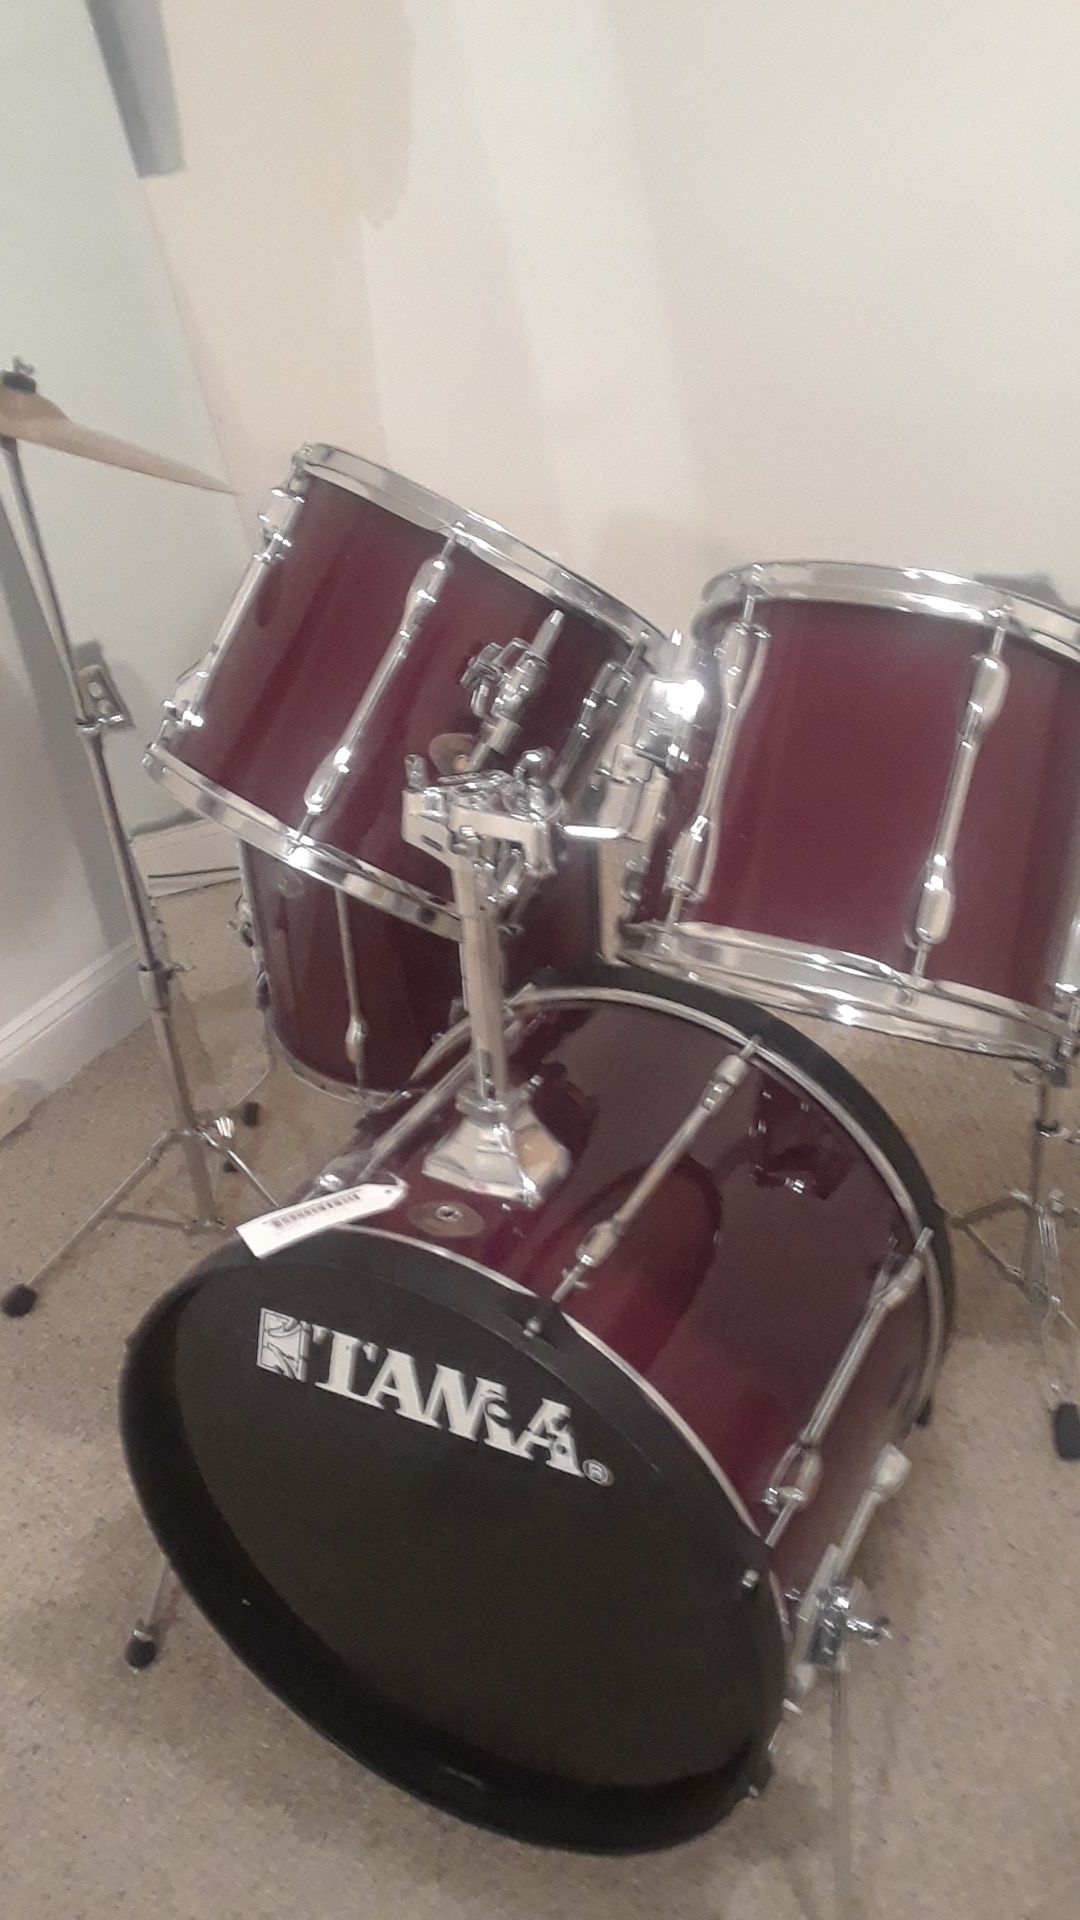 Tama 5 piece drum set like new condition